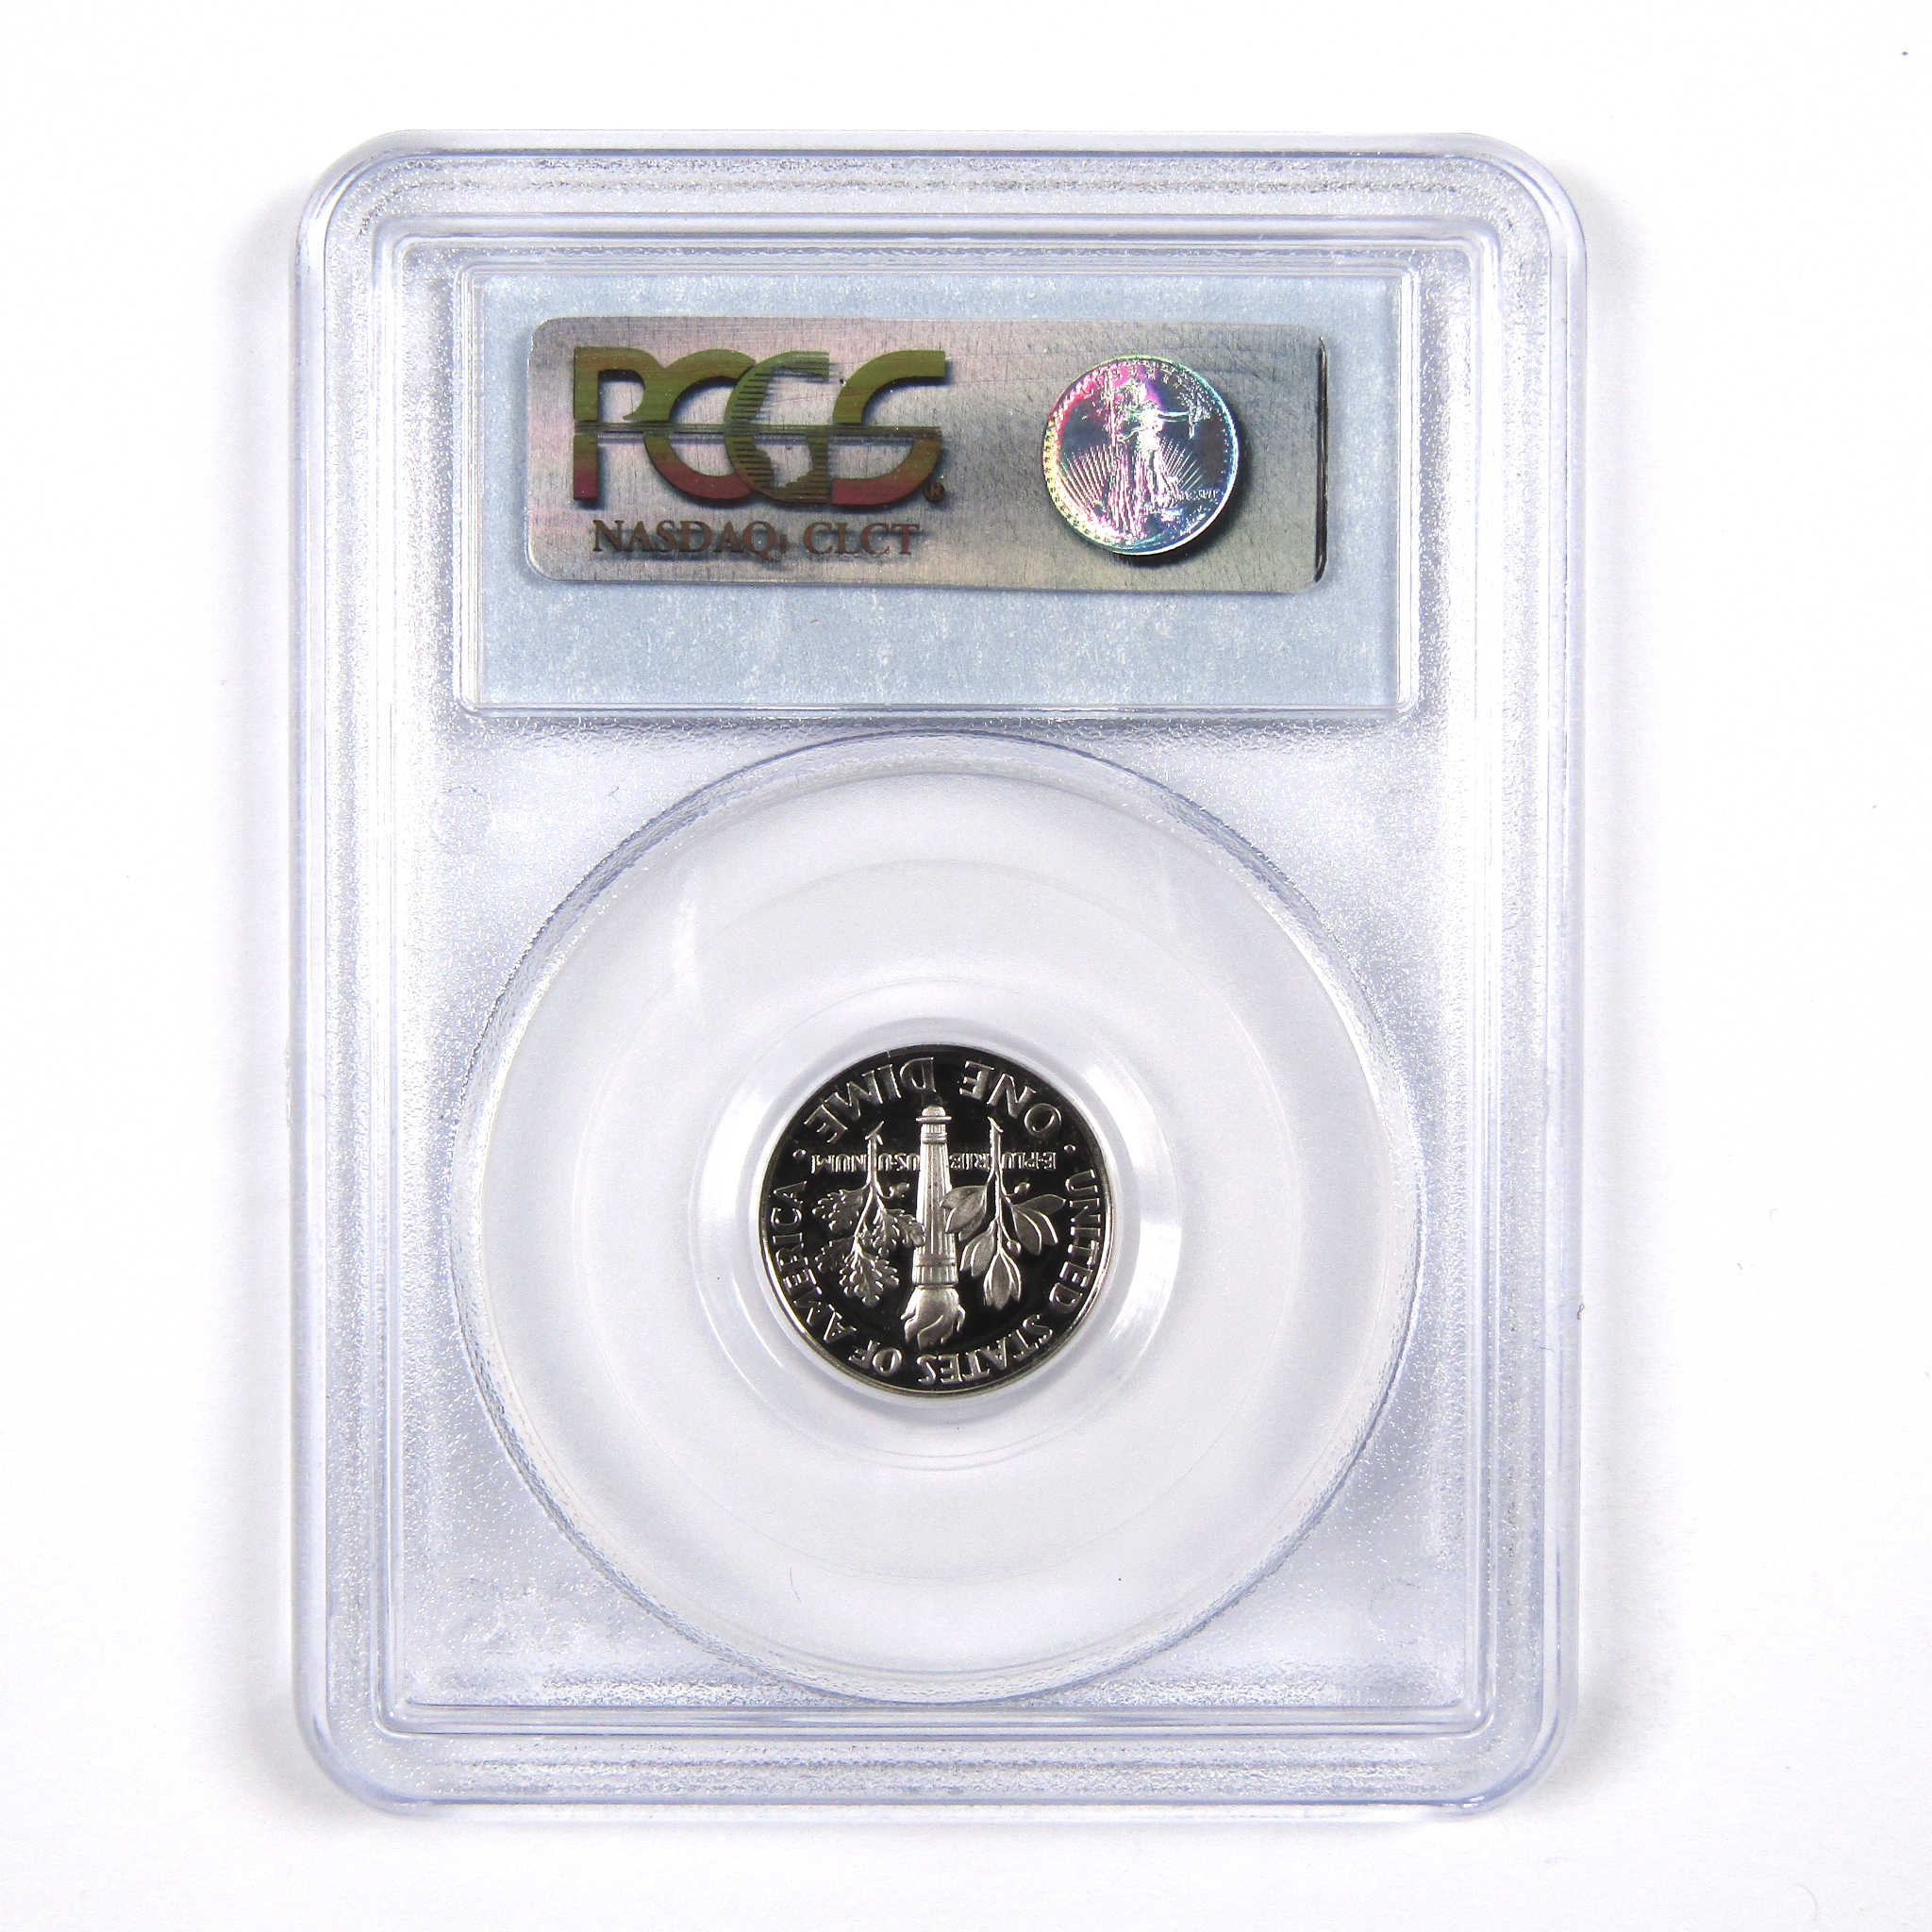 2004 S Roosevelt Dime PR 69 DCAM PCGS 10c Proof Coin SKU:CPC3099